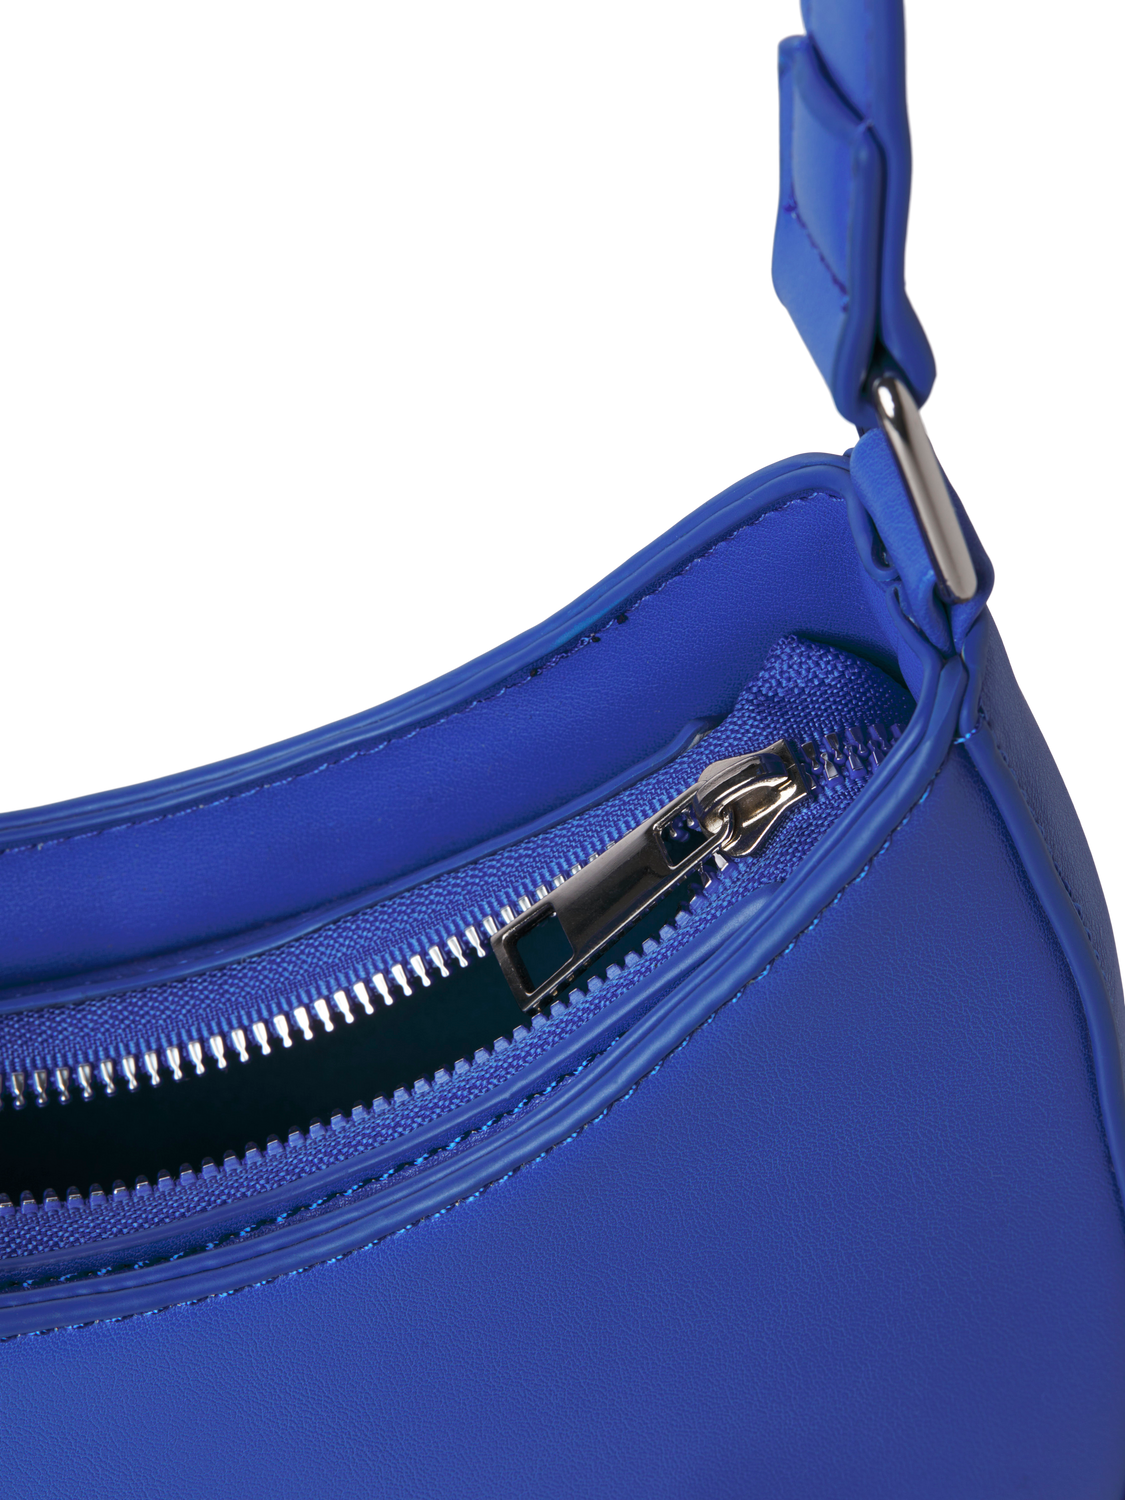 JJXX Τσάντα για τον ώμο -Blue Iolite - 12251593